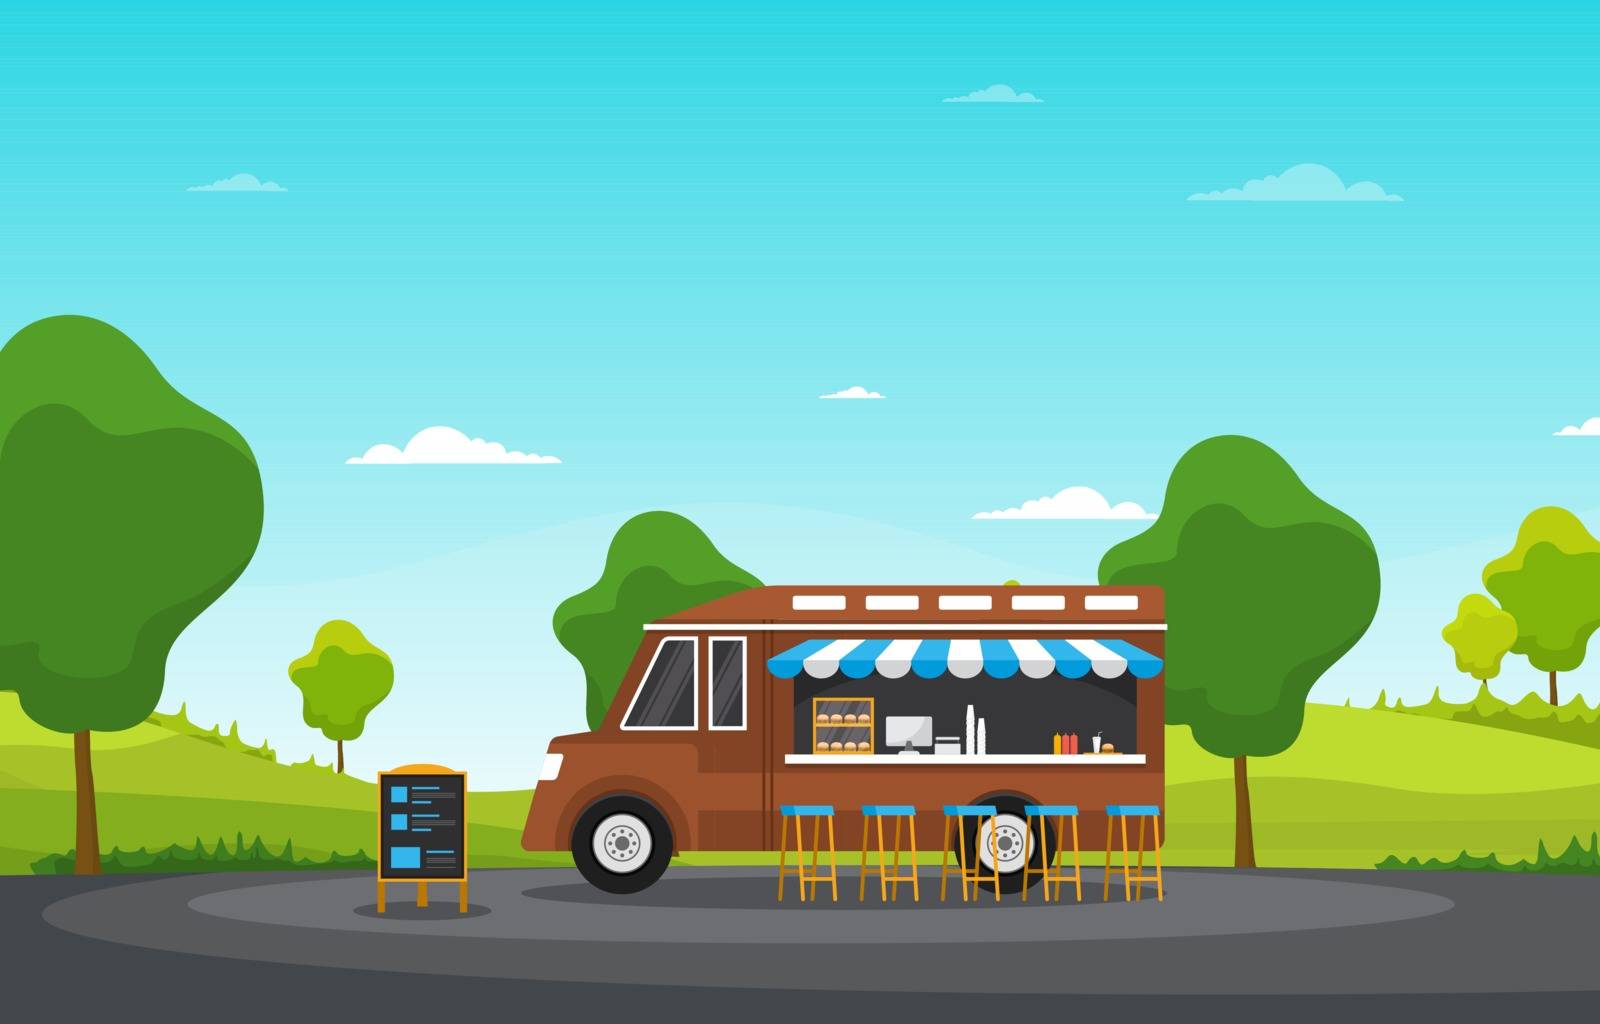 Food Truck Van Car Vehicle Street Shop Park Illustration